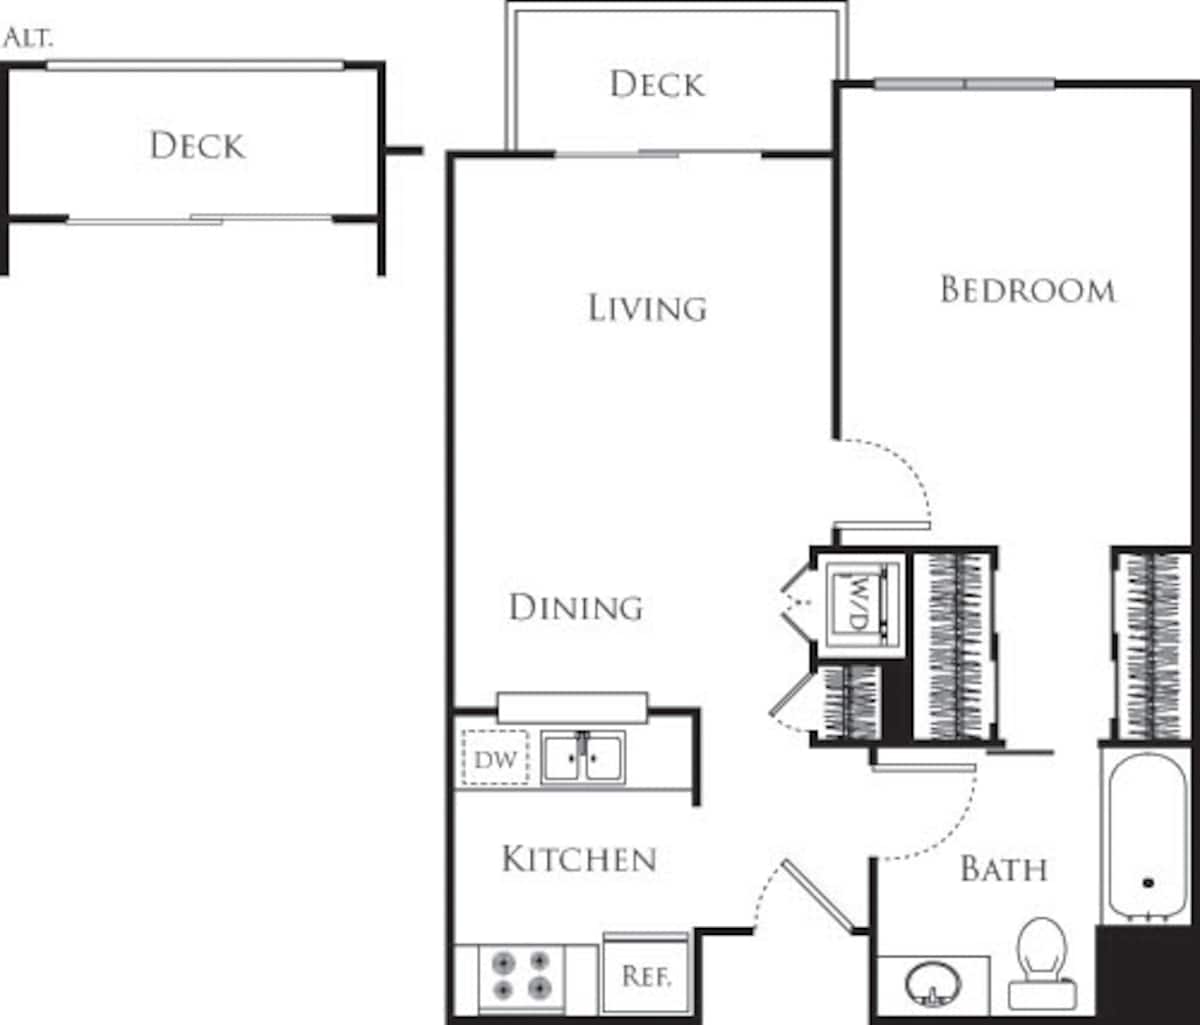 Floorplan diagram for Plan A, showing 1 bedroom